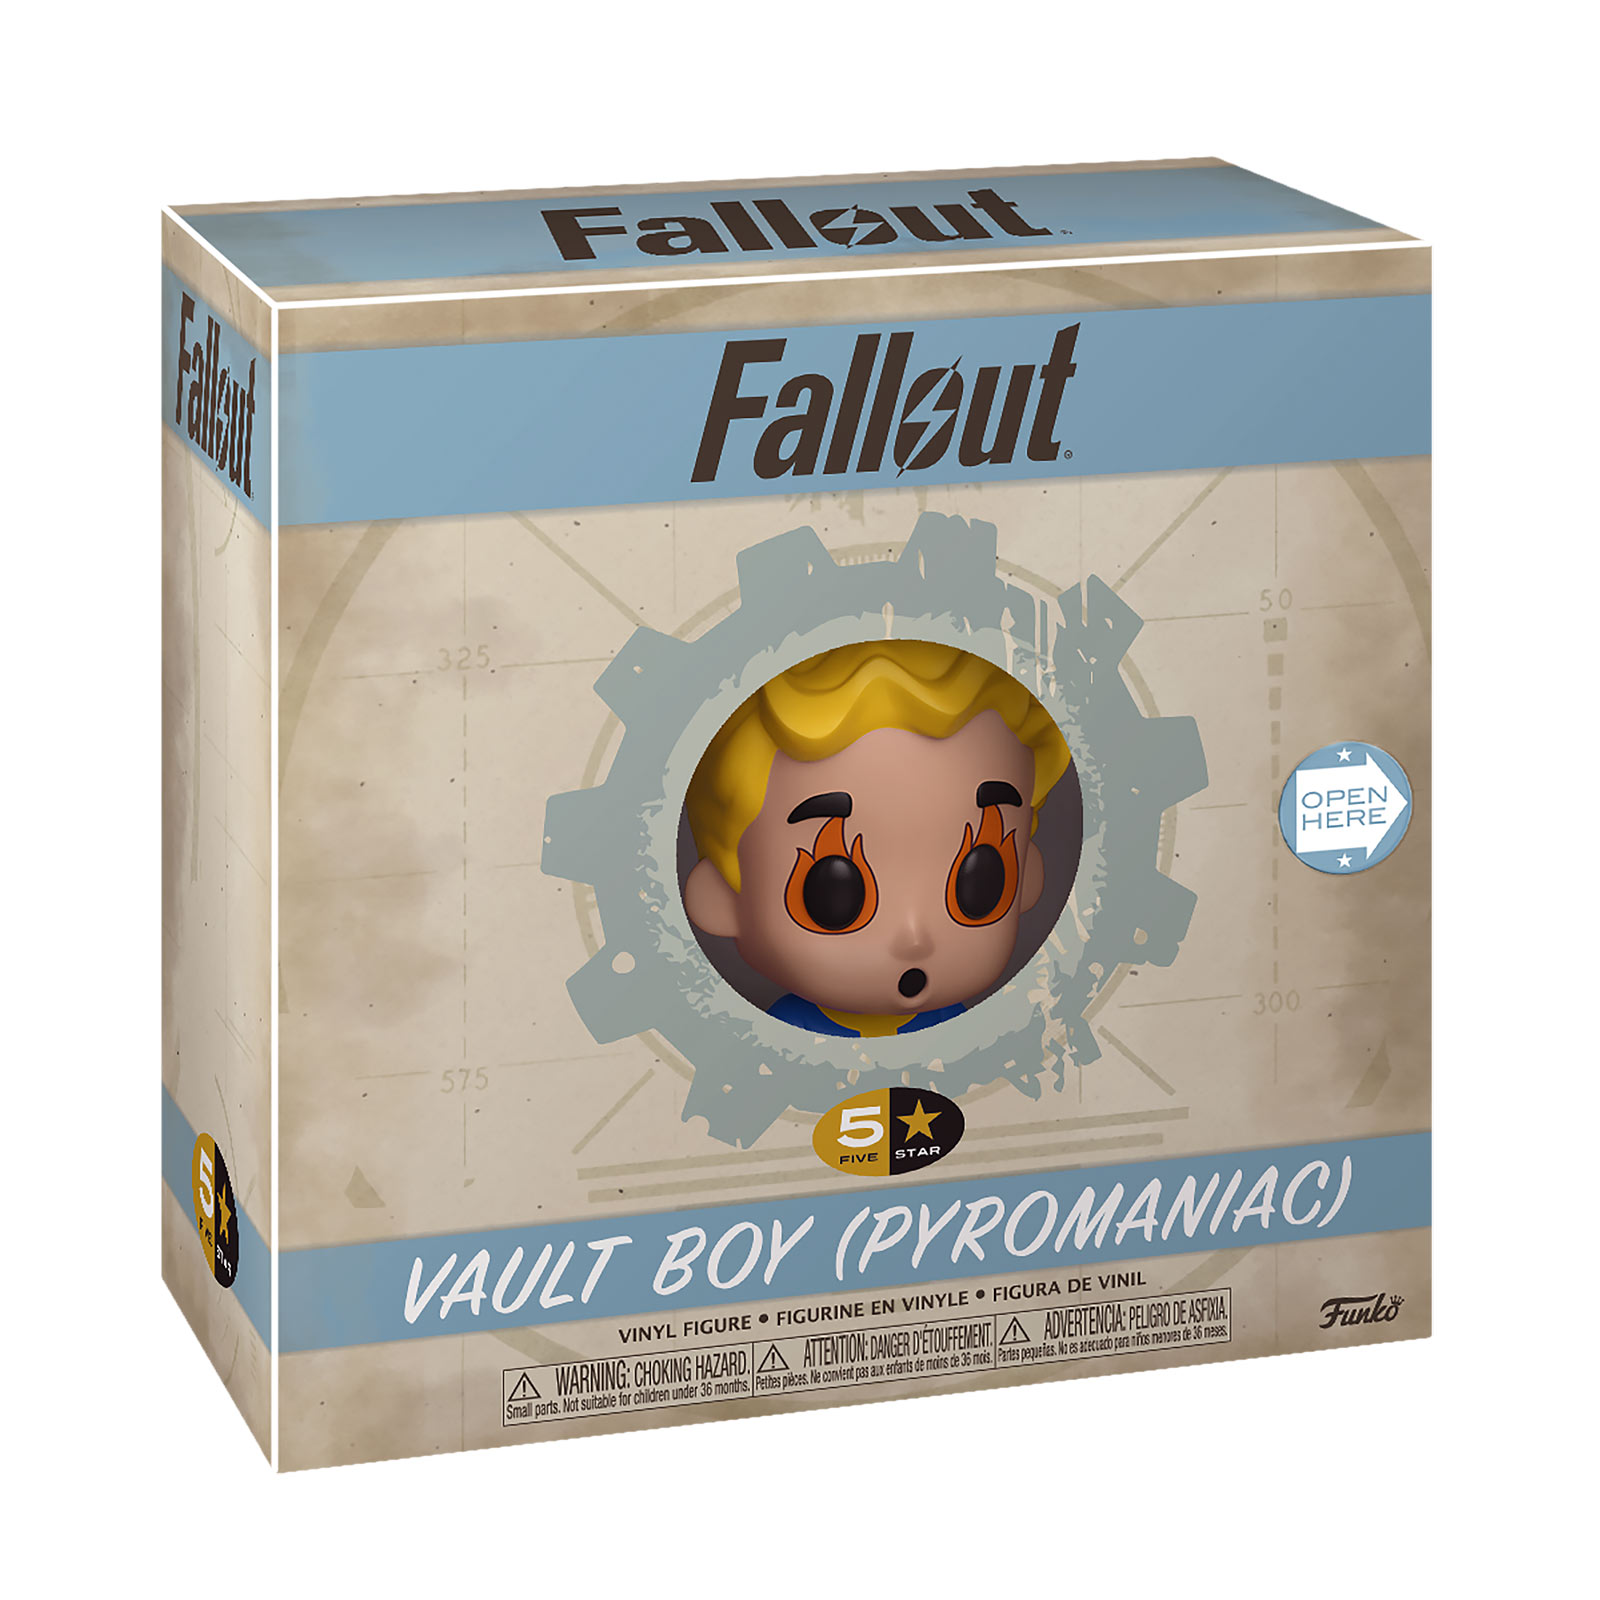 Fallout - Vault Boy Pyromaniac Figurine Funko Five Star